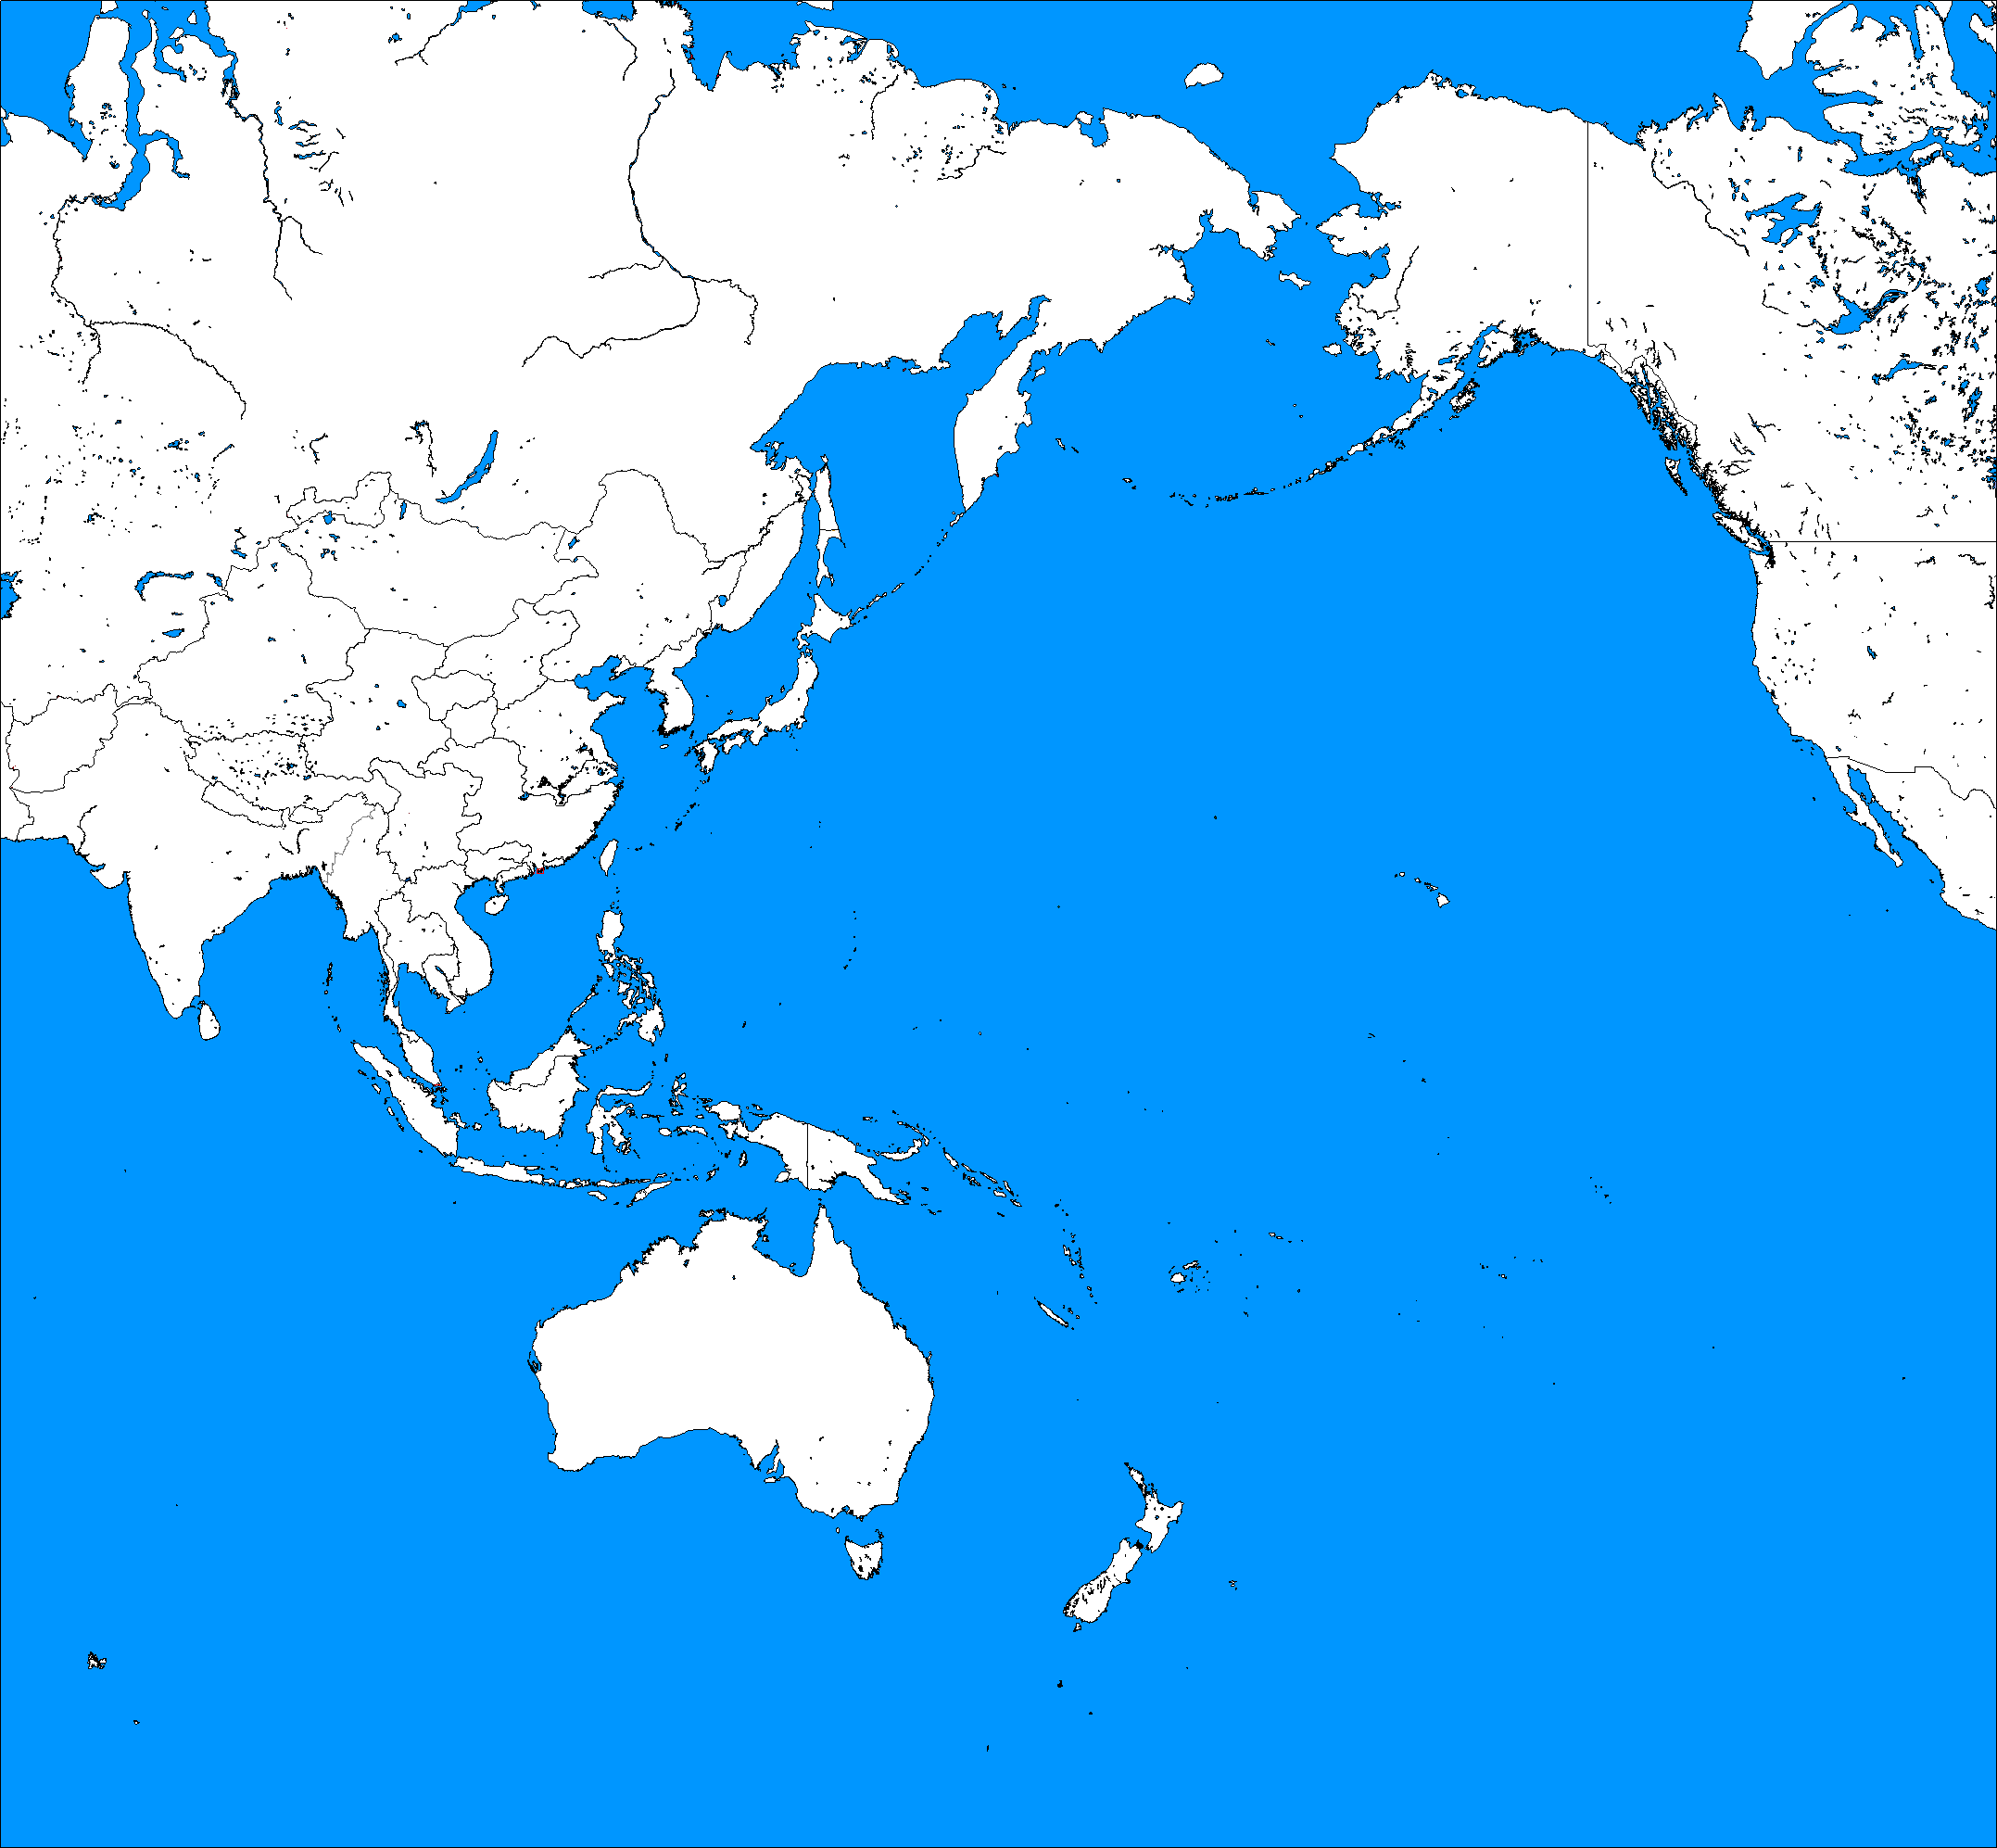 White asia. Карта Азии для мапперов. Карта Азии 1936. Азия для маппинга.